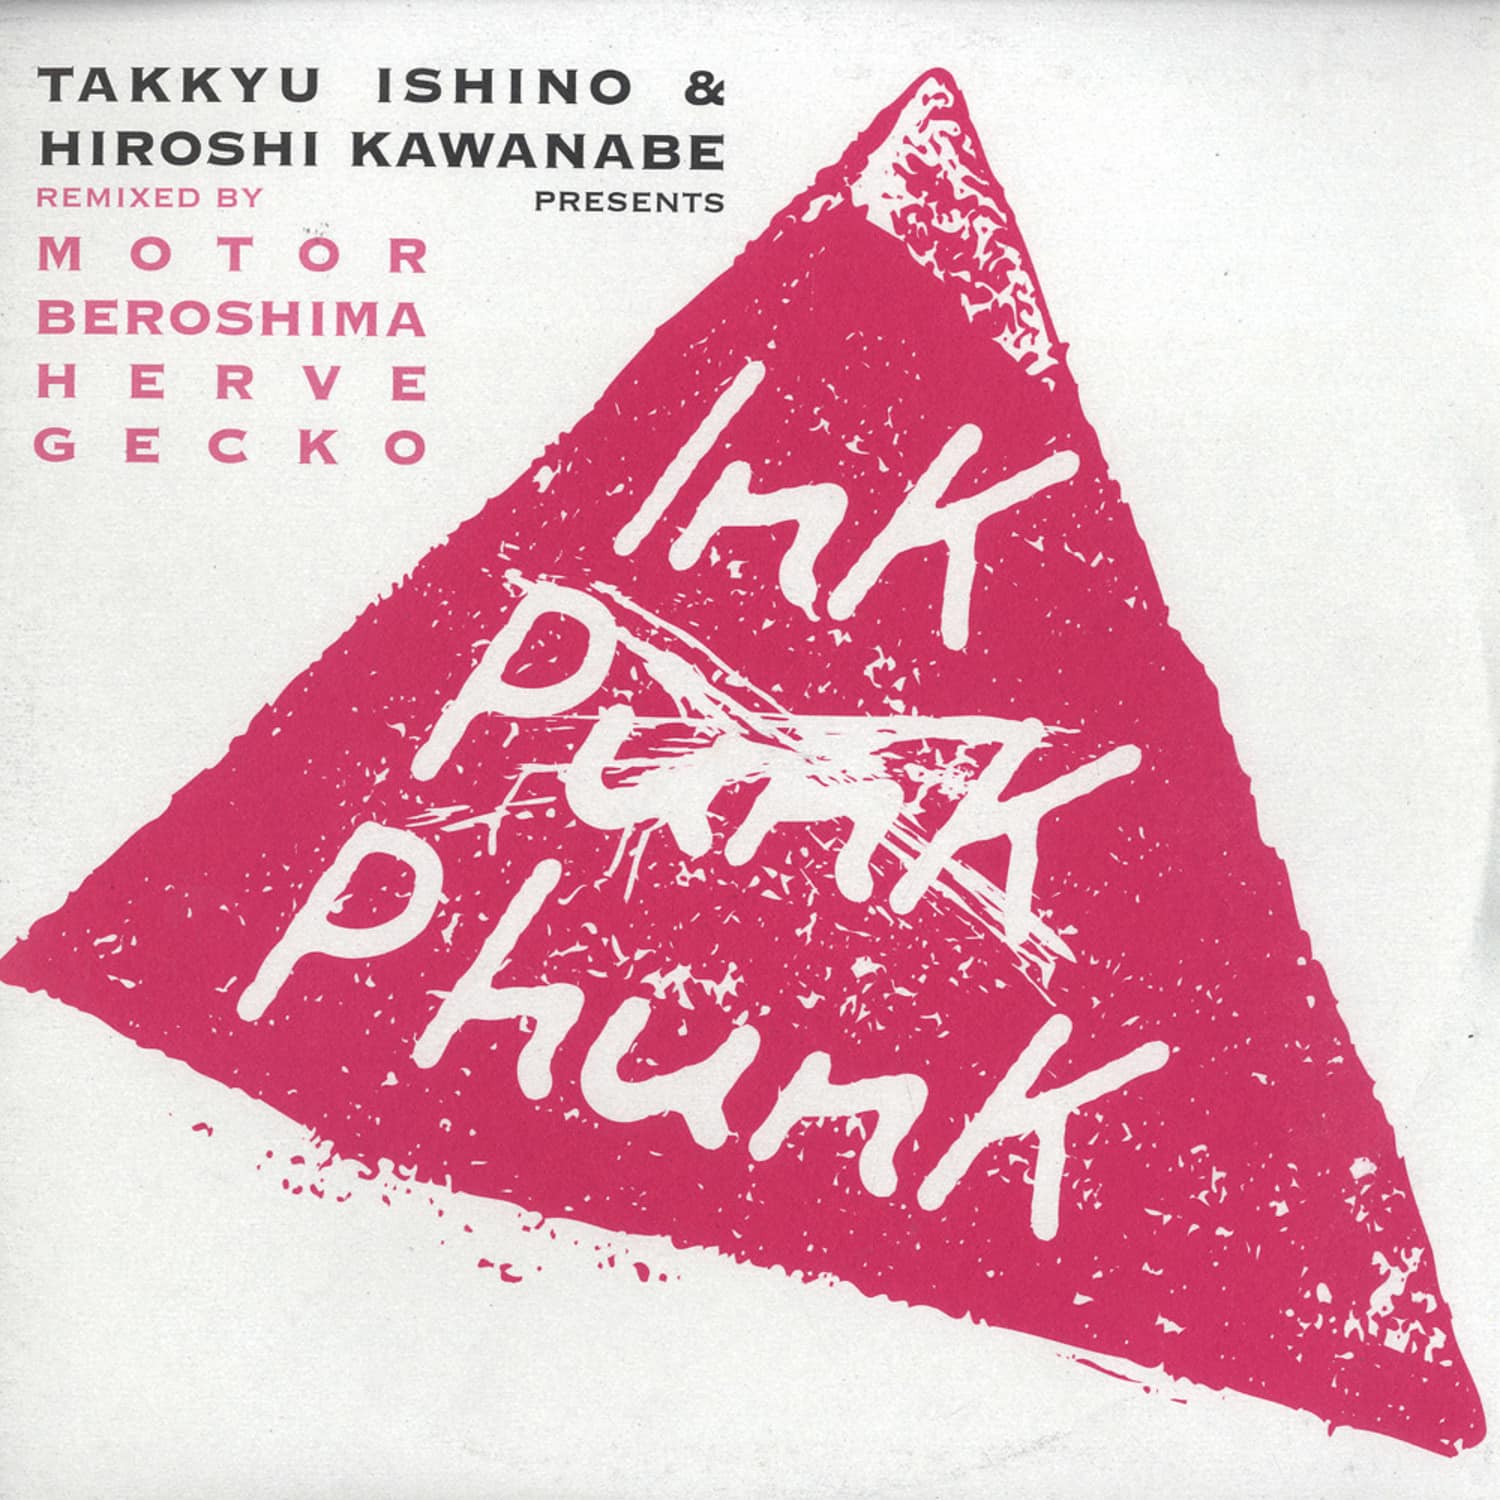 Takkyu Ishino Presents Ink - PUNK PHUNK